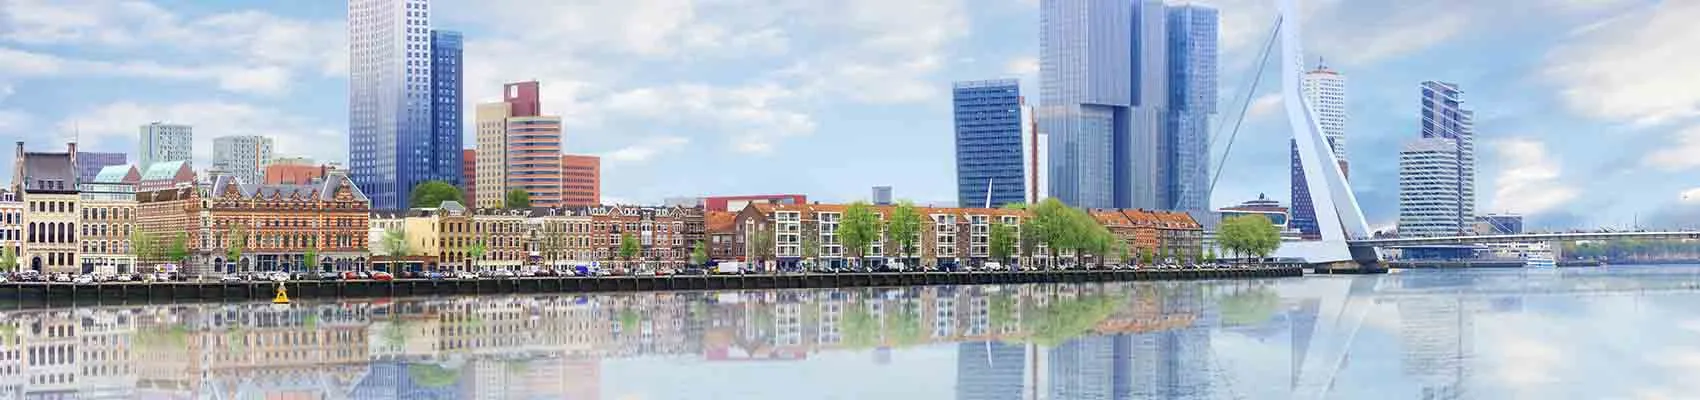 Messebau Rotterdam Stadt